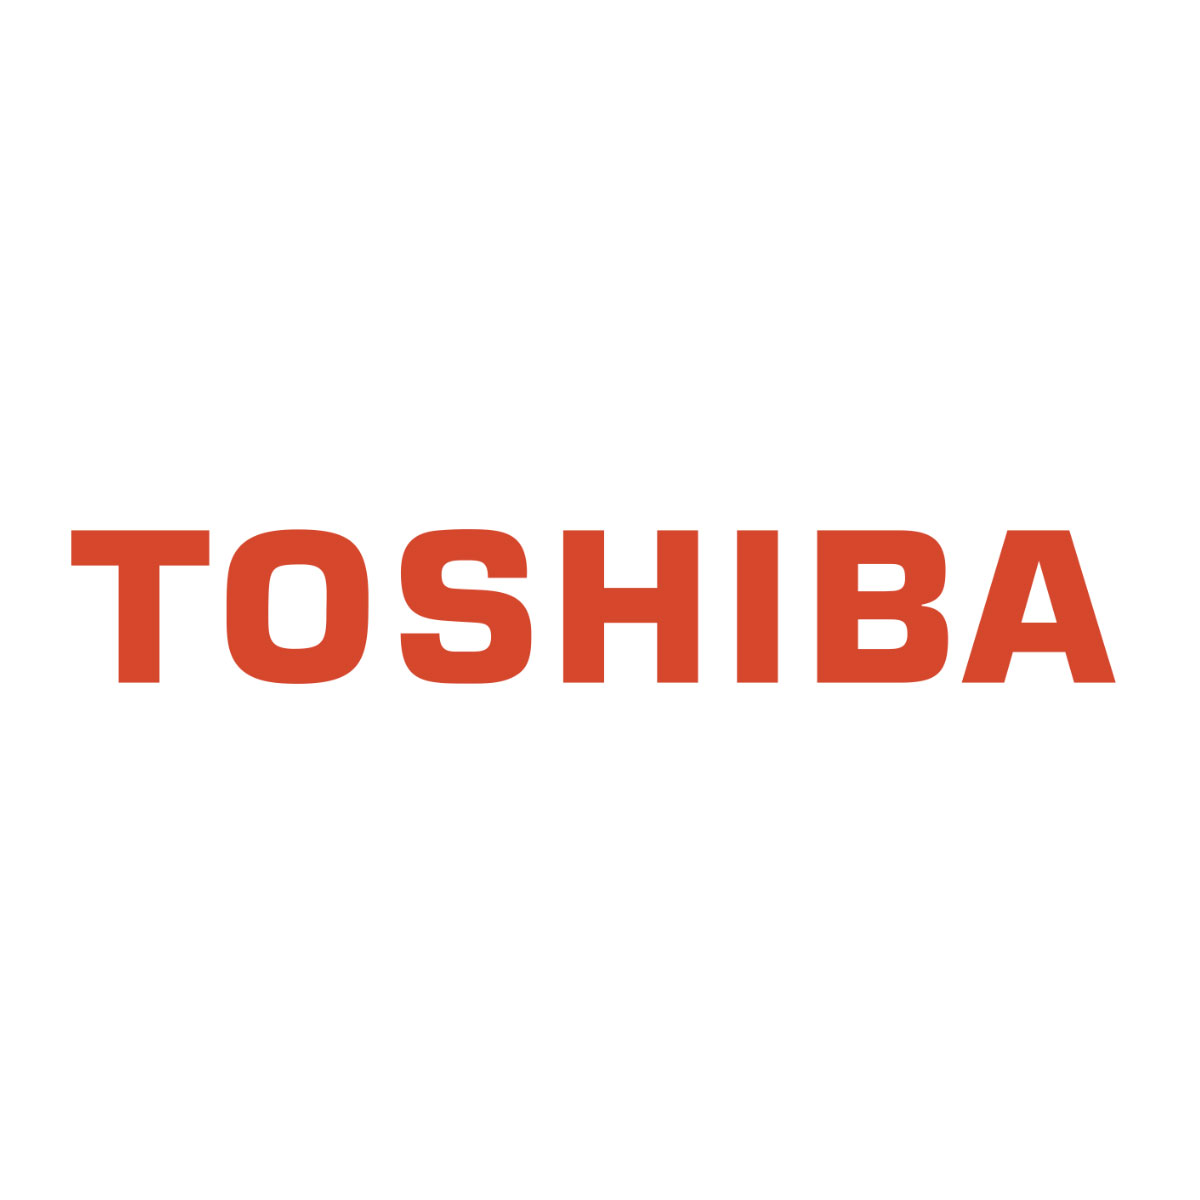 Toshiba Logo, Ecothermo